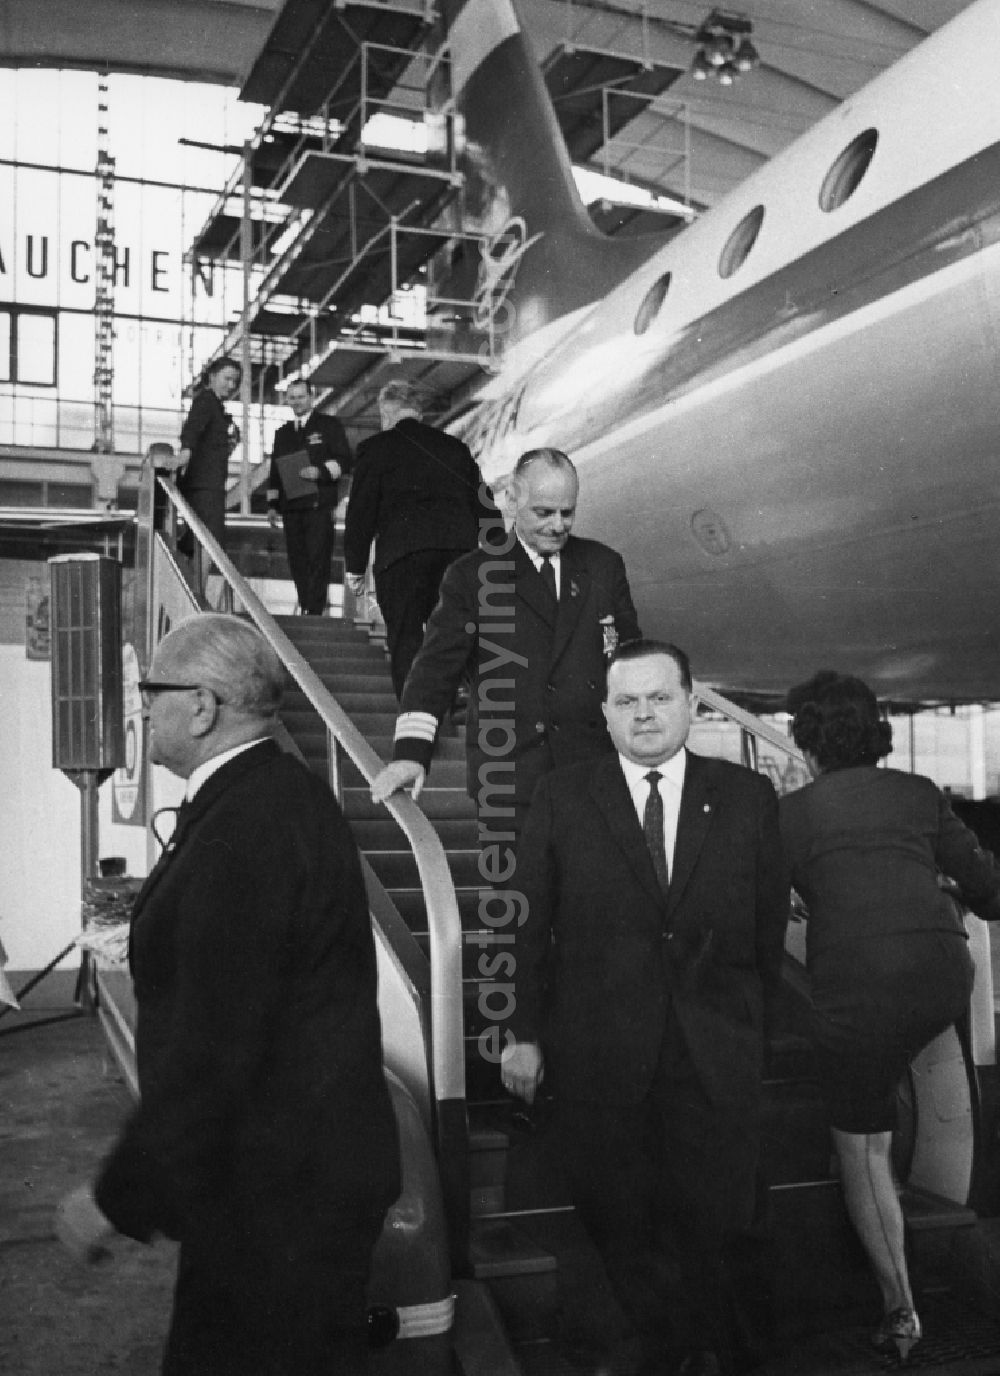 Schönefeld: Colonel Paul Wilpert, the then Minister for Transport Erwin Kramer and the Principal Director Arthur Pieck (left) in a hangar INTERFLUG Schoenefeld in today's Brandenburg